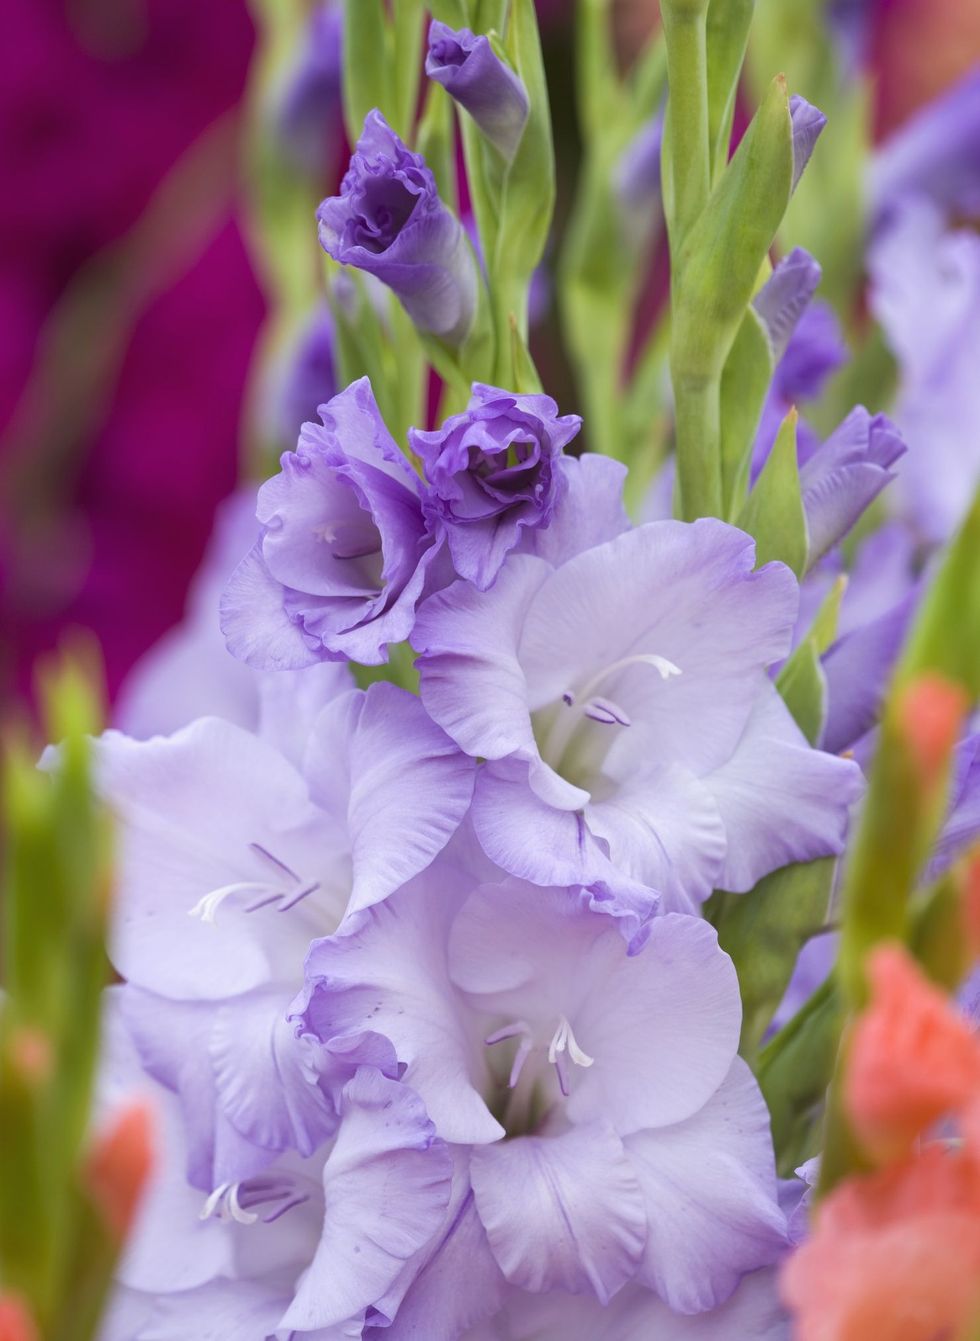 purple flowers of gladiolus variety 'sweet blue'